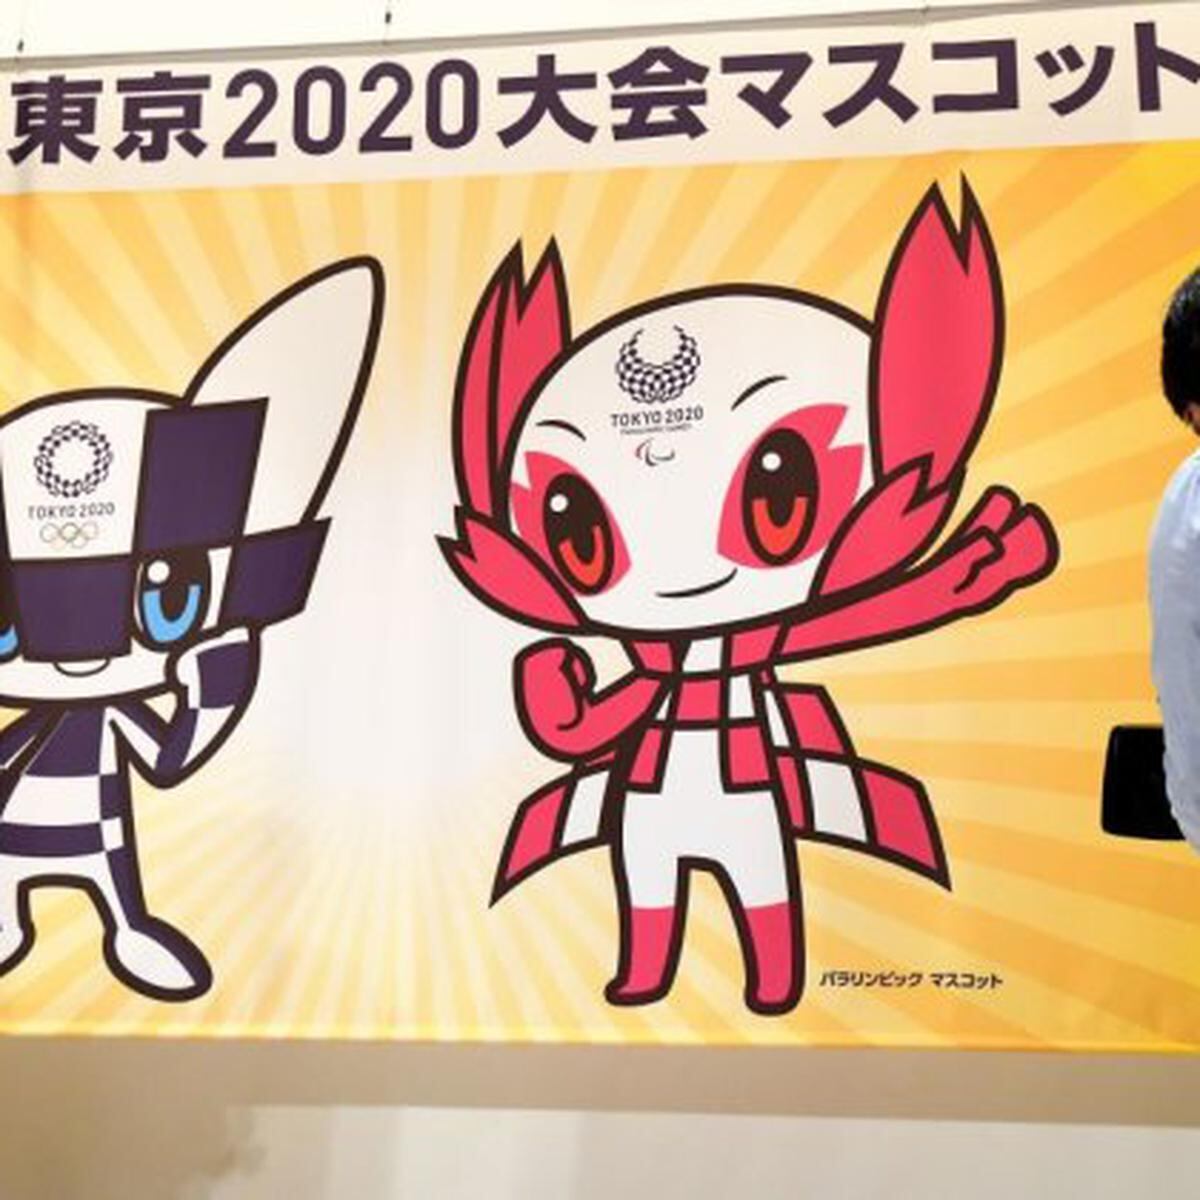 Juegos Olimpicos Japon 2020 Mascota - Aula